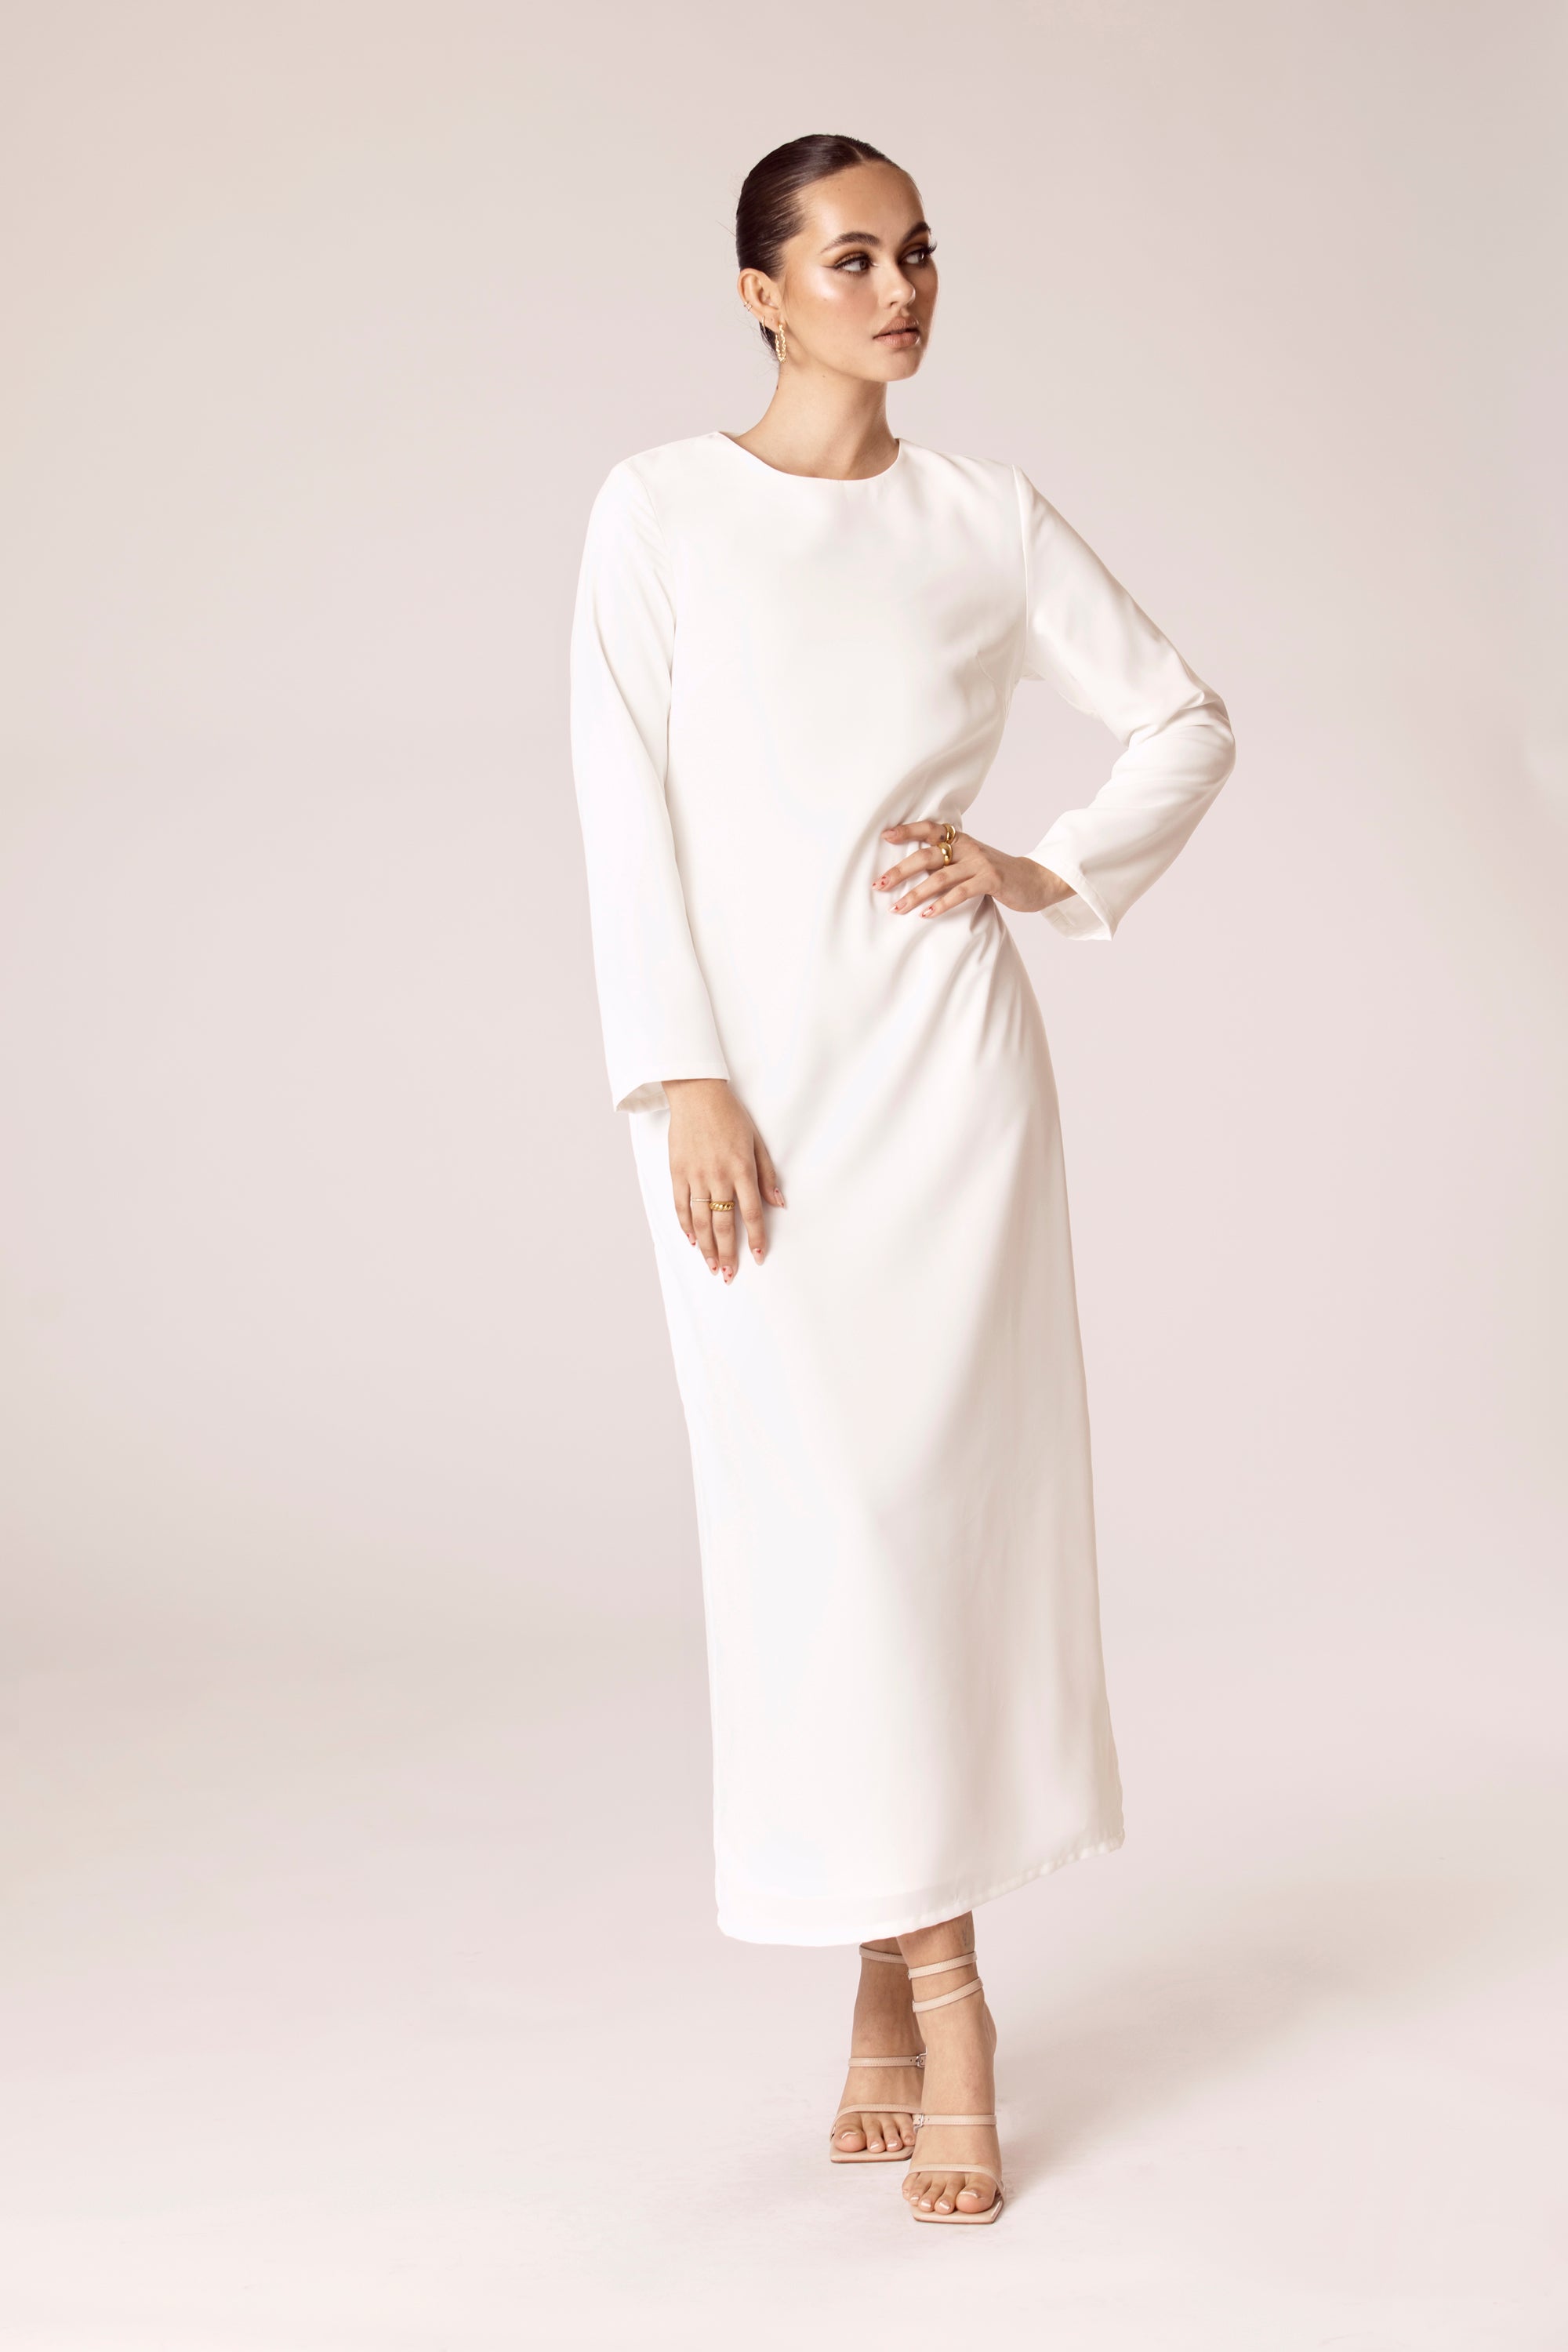 Essential Inner Slip Maxi Dress - White Veiled Collection 